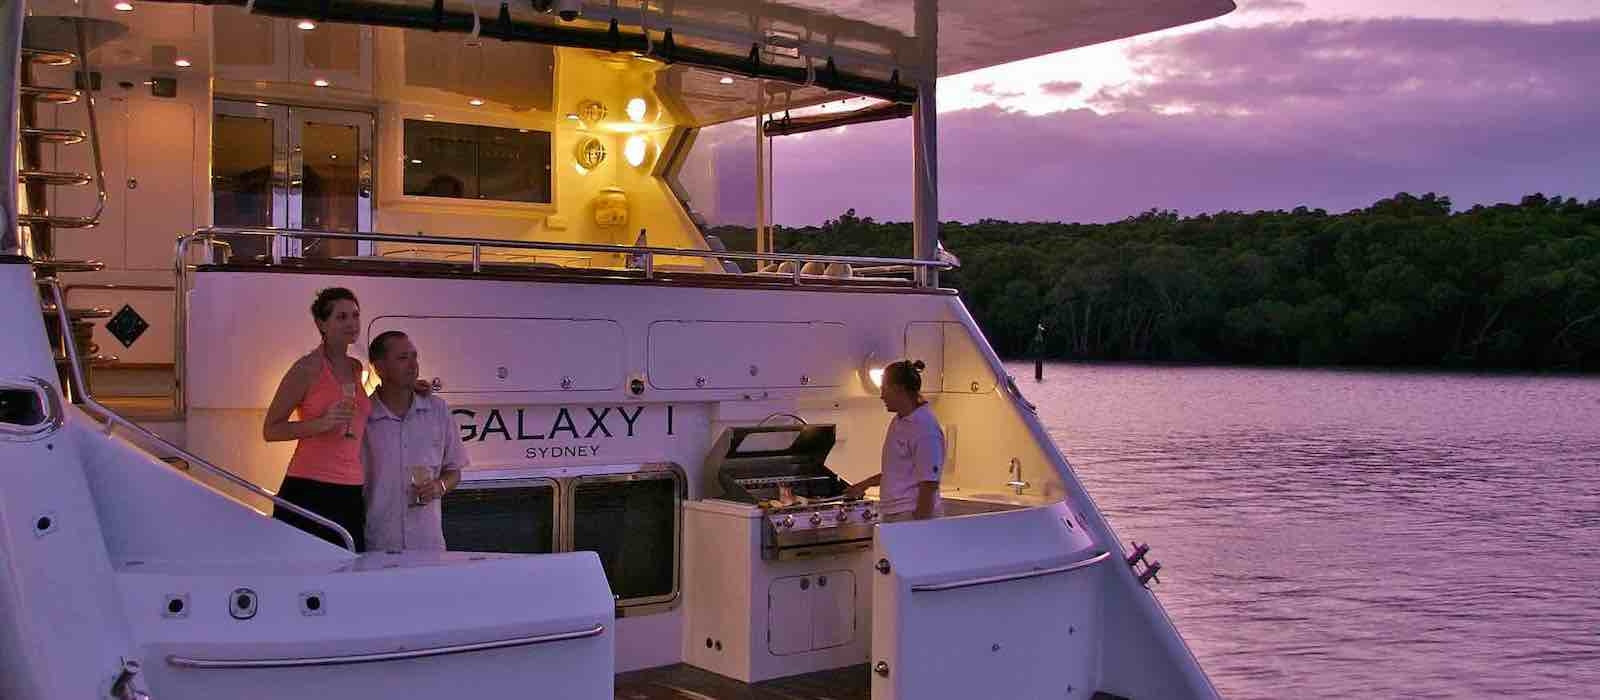 Aft deck swim platform and BBQ on Galaxy I luxury boat hire Whitsundays